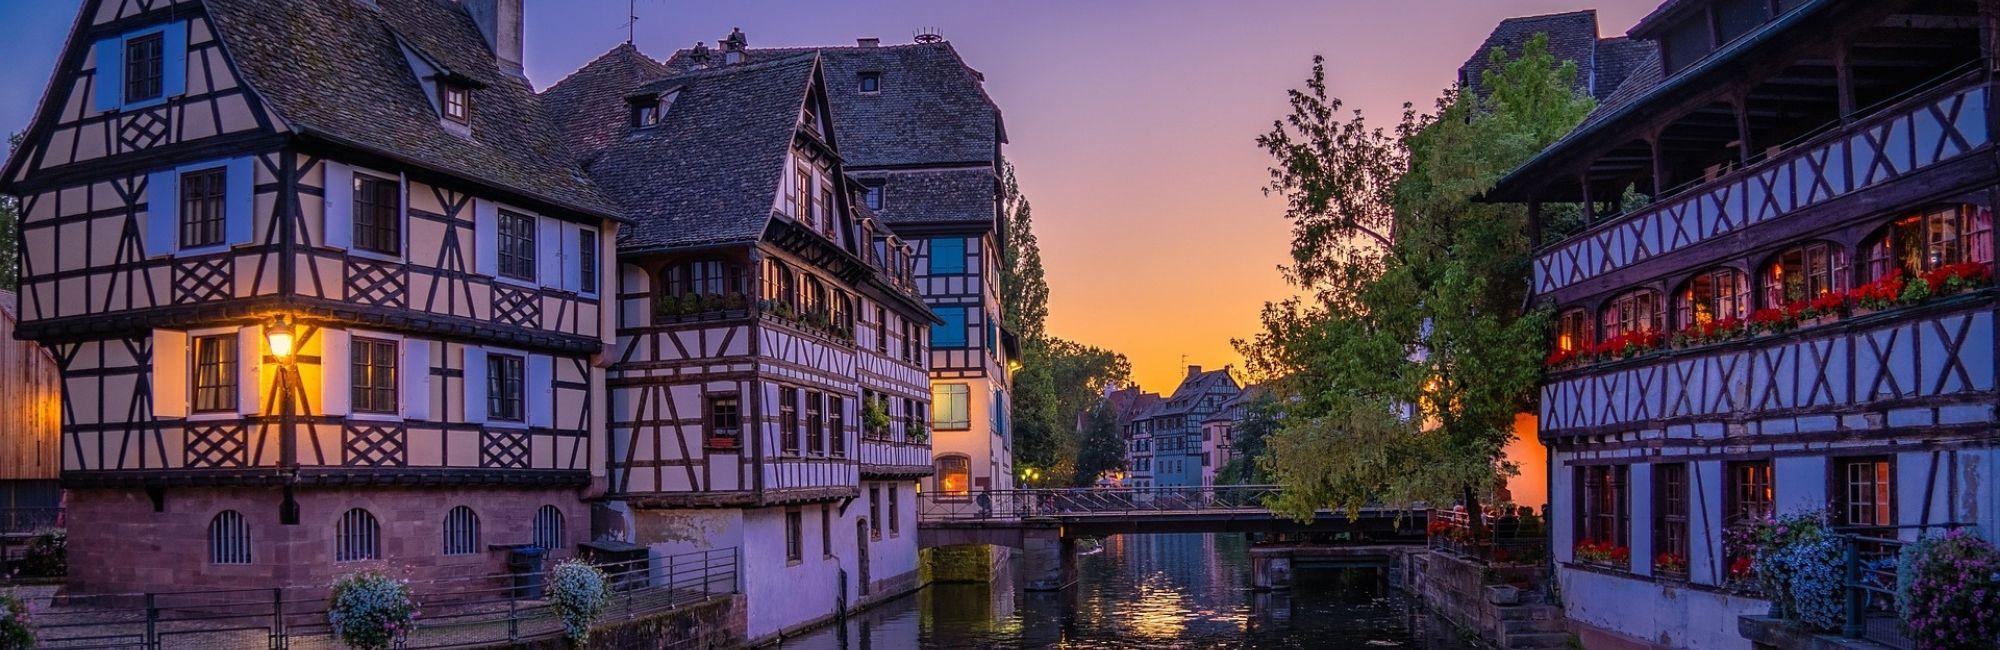 Alsace Strasbourg Pixabay